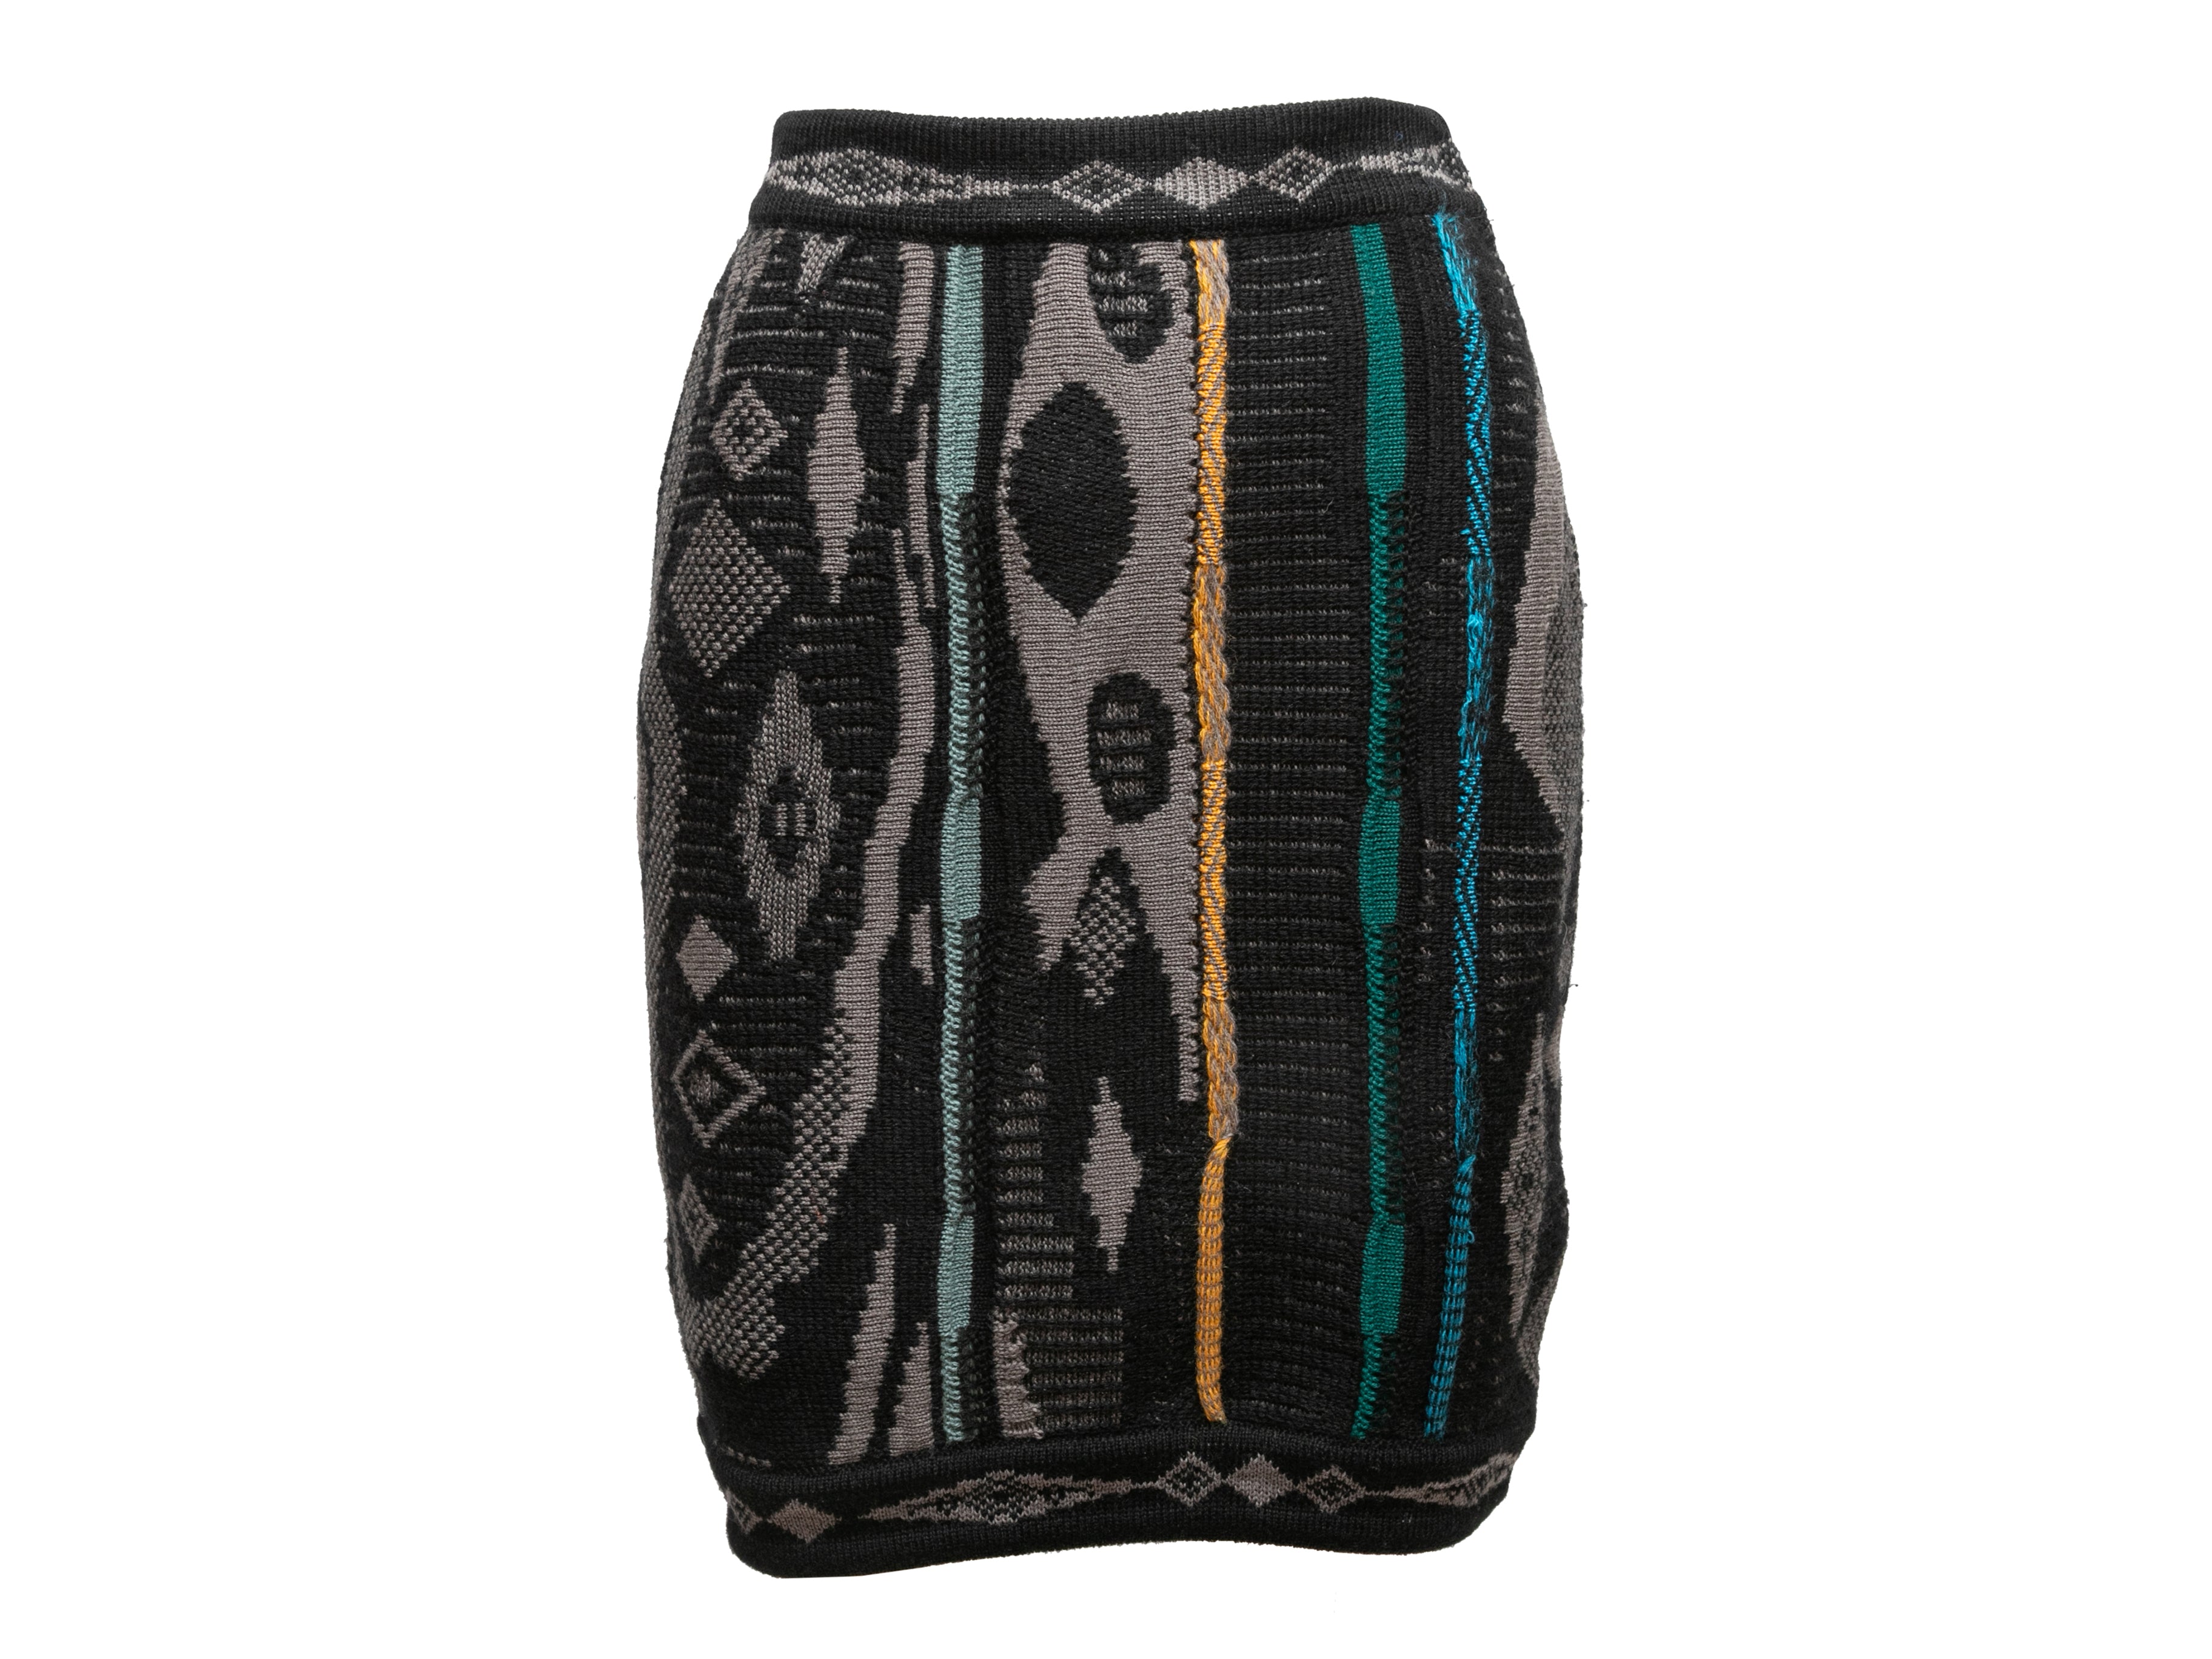 Black & Multicolor Wool Knit Skirt Size US M